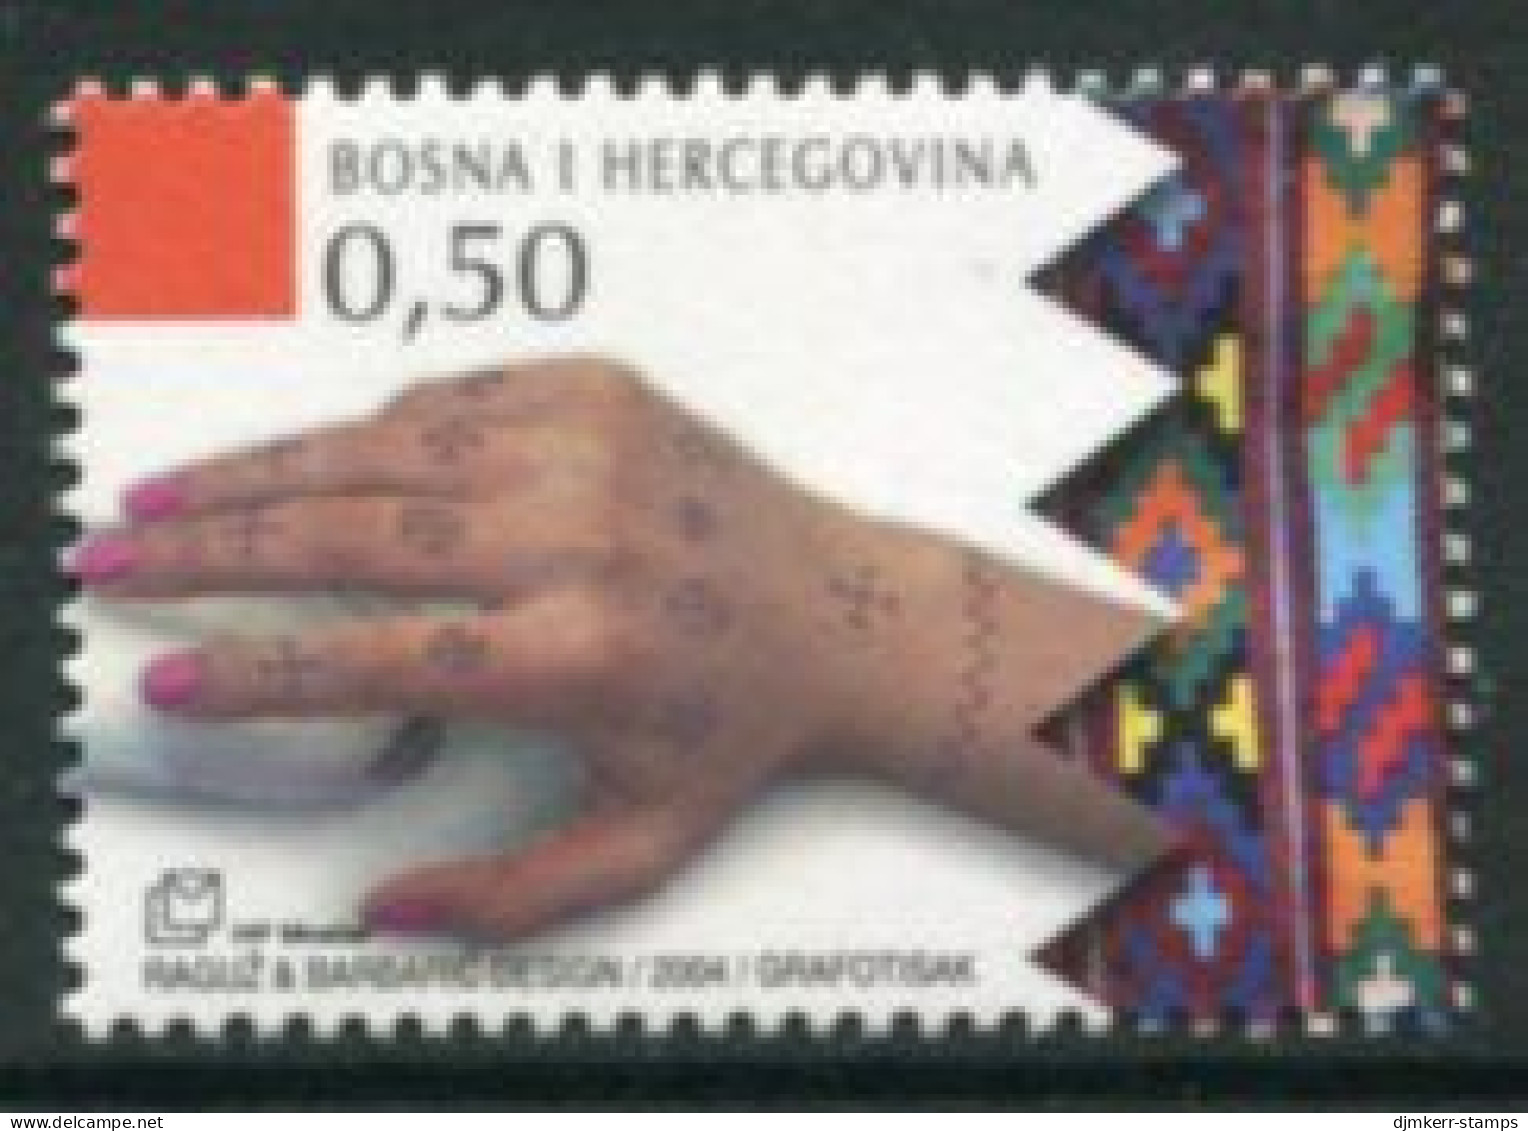 BOSNIA HERCEGOVINA (CROAT) 2004 Tattoos MNH / **.  Michel 126 - Bosnie-Herzegovine